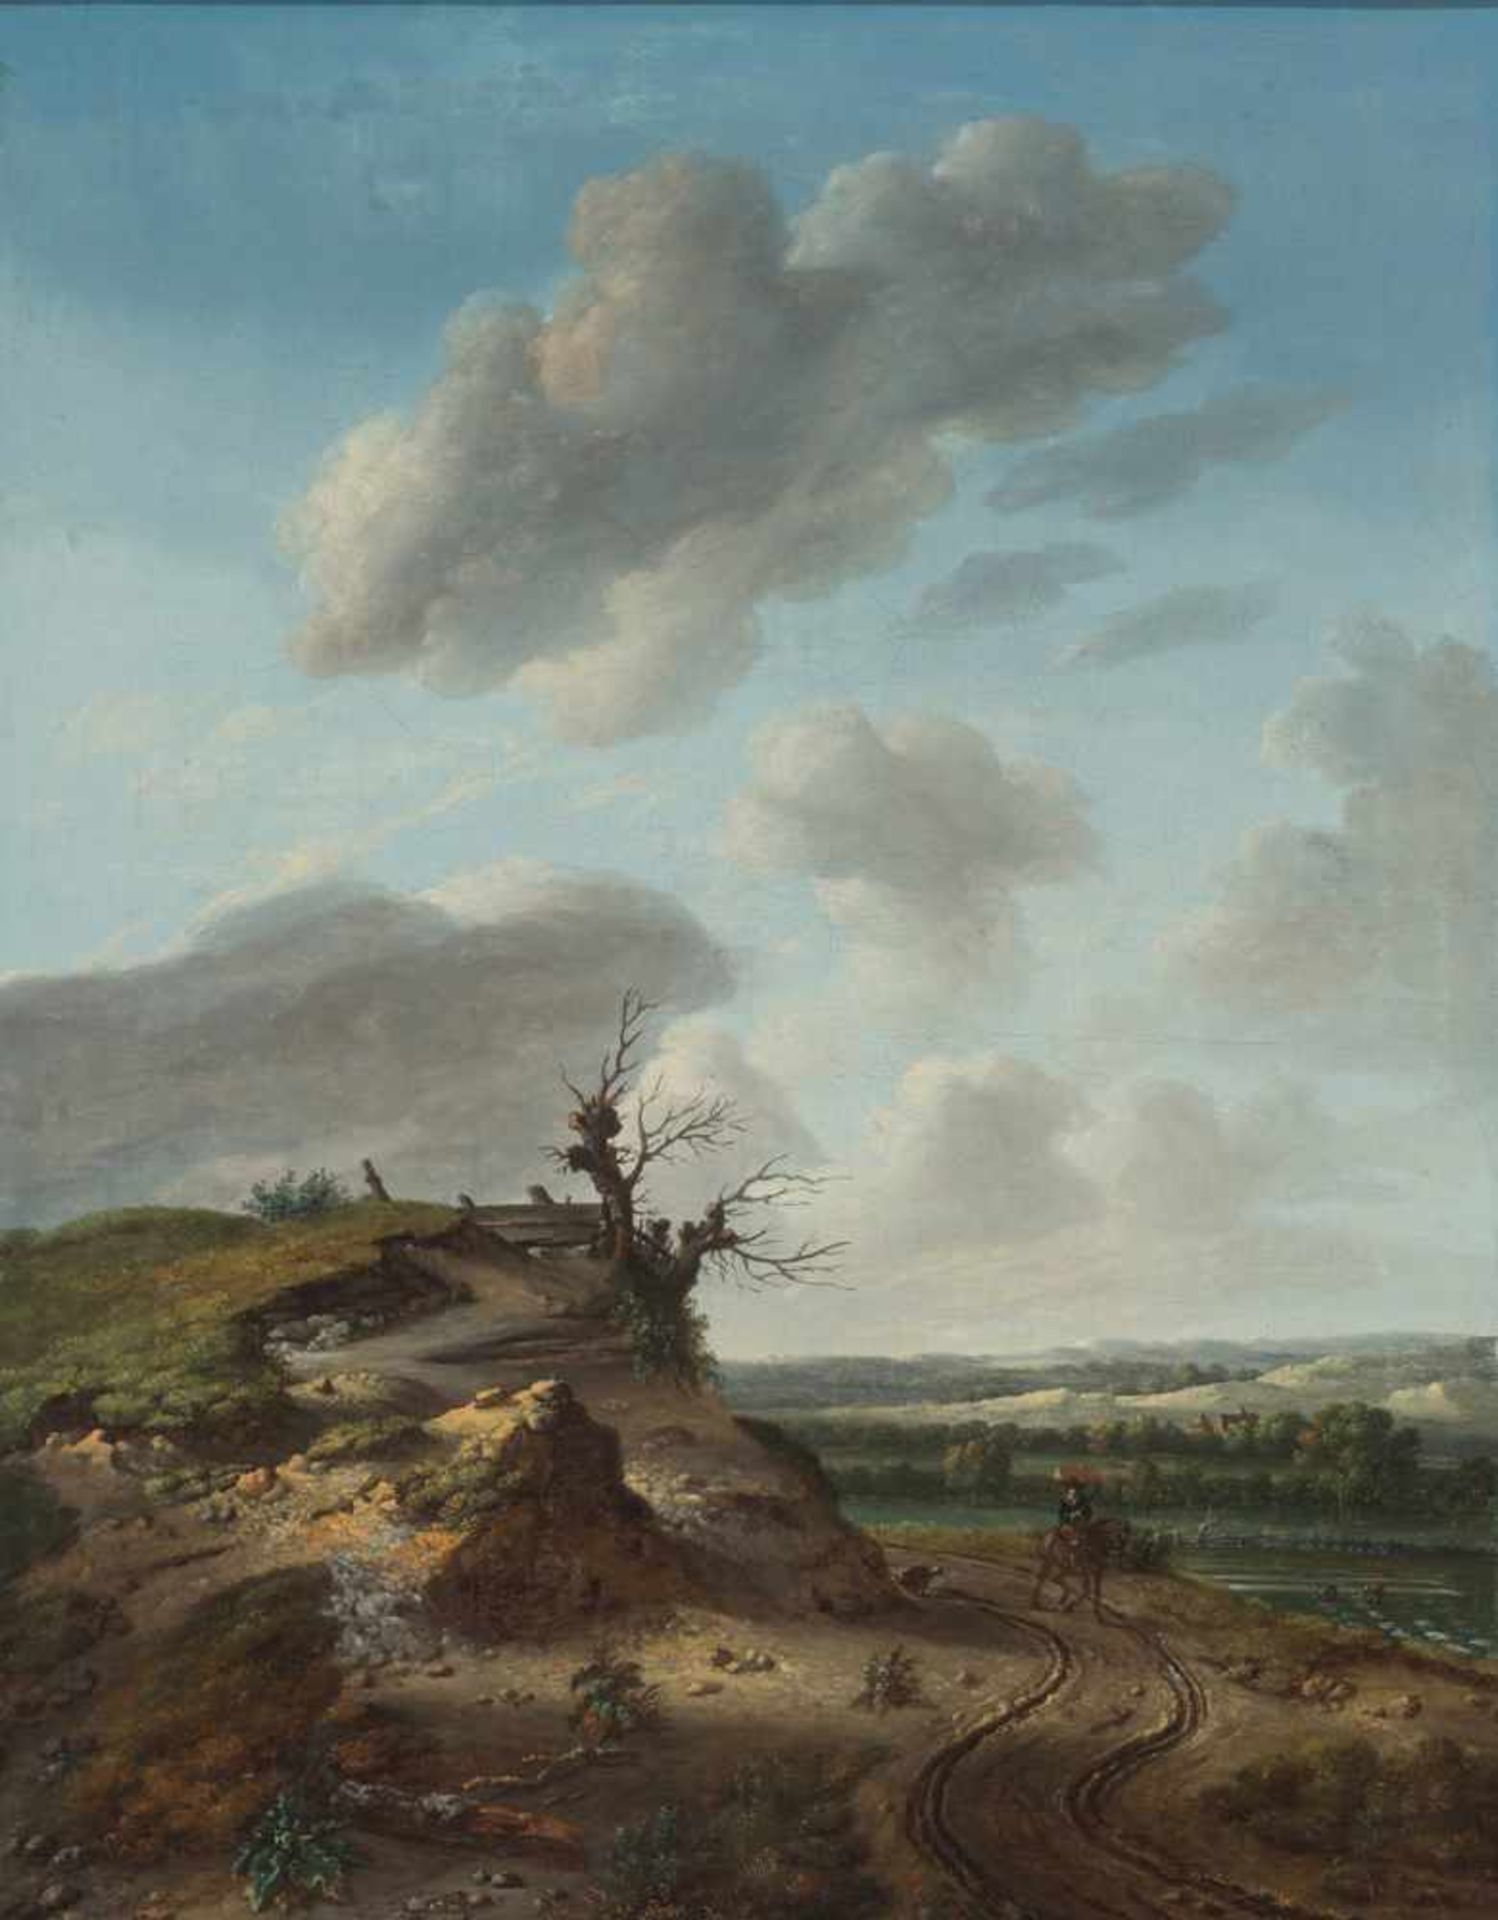 JAN WIJNANTS (c. 1632-1684), OIL ON CANVAS ‘LANDSCAPE WITH A BLEAK DUNE’Jan Wijnants (around 1632-